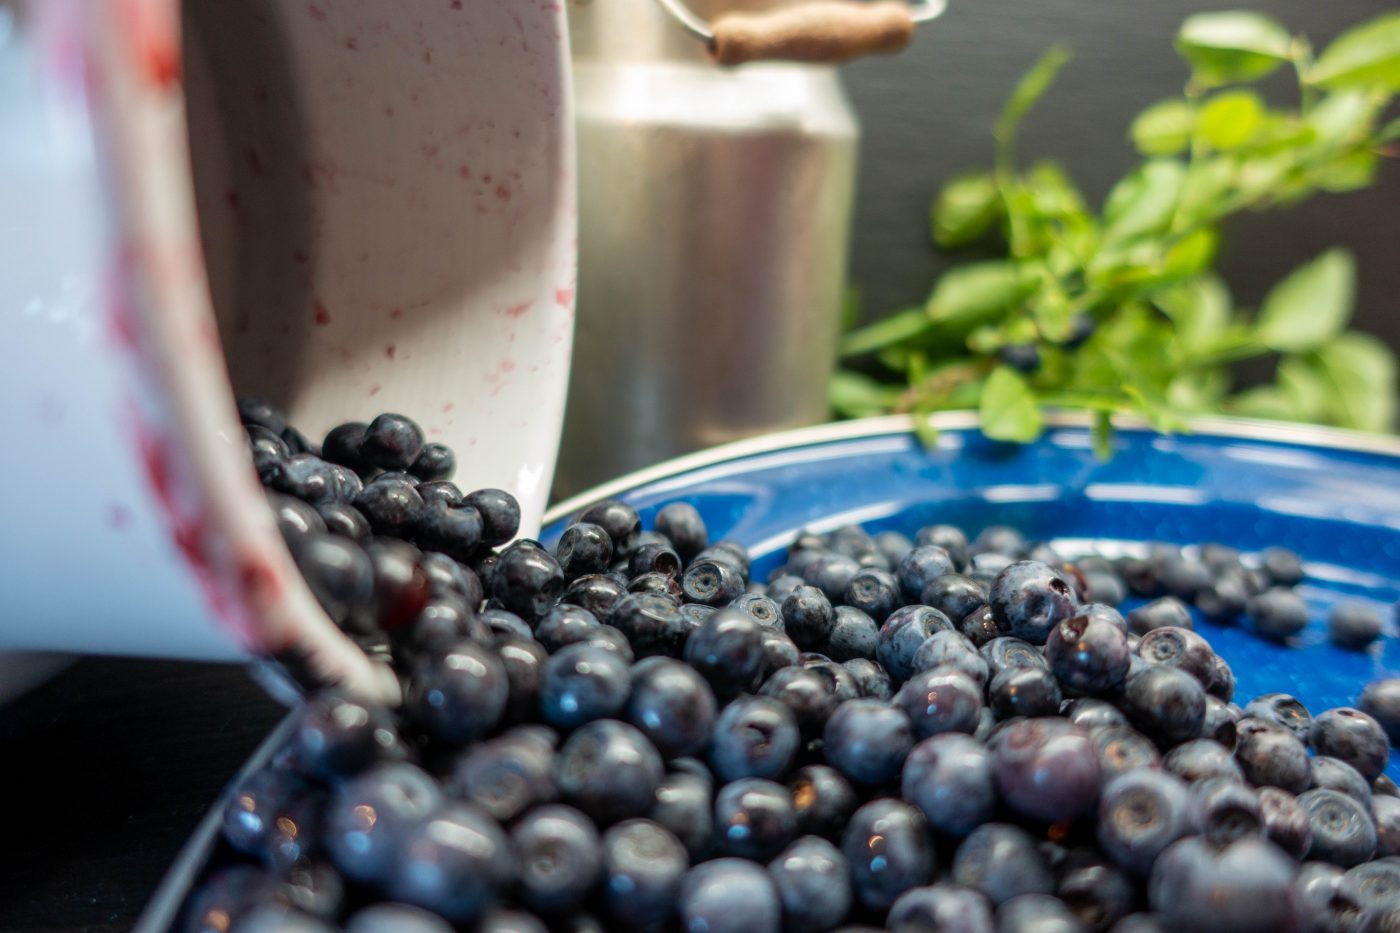 Picking blueberries - a heavenly pleasure